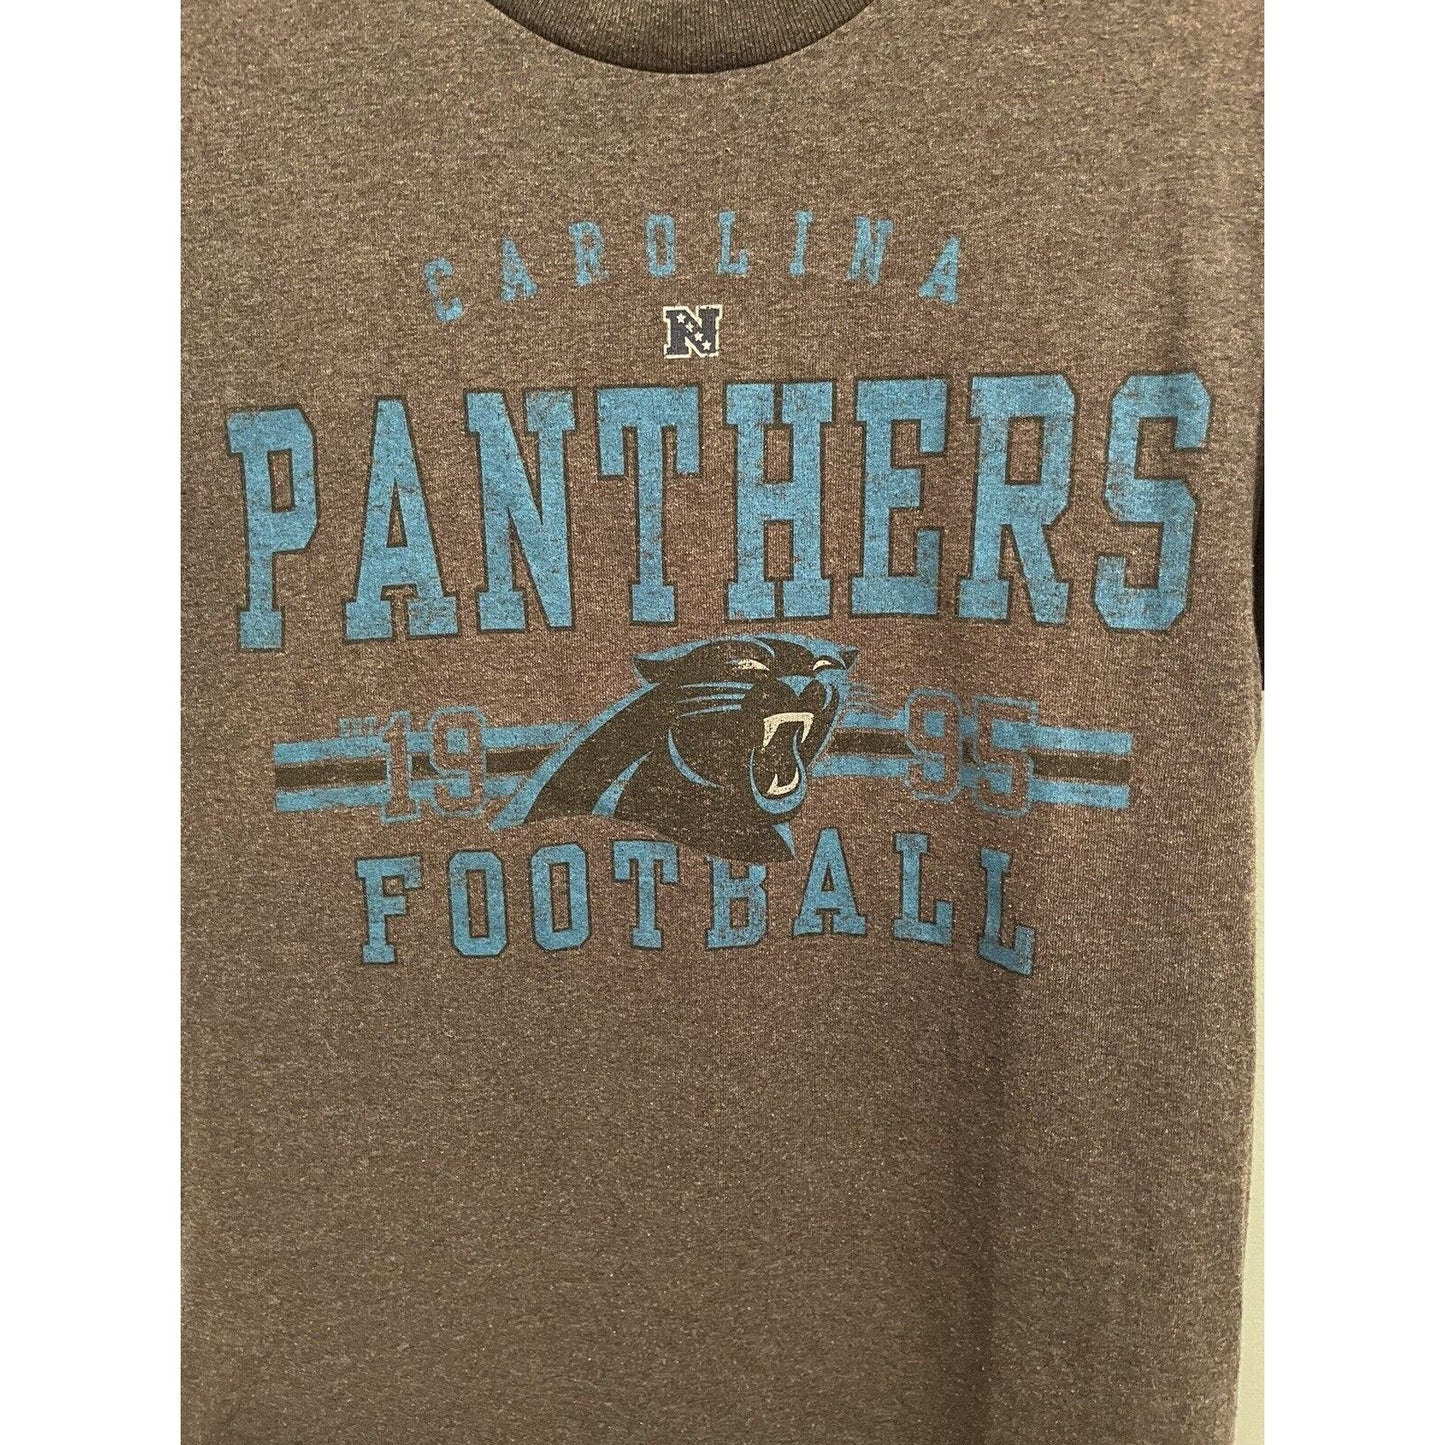 Carolina Panthers Shirt Men S Dark Gray Blue NFL Team Football Tee Short Sleeve